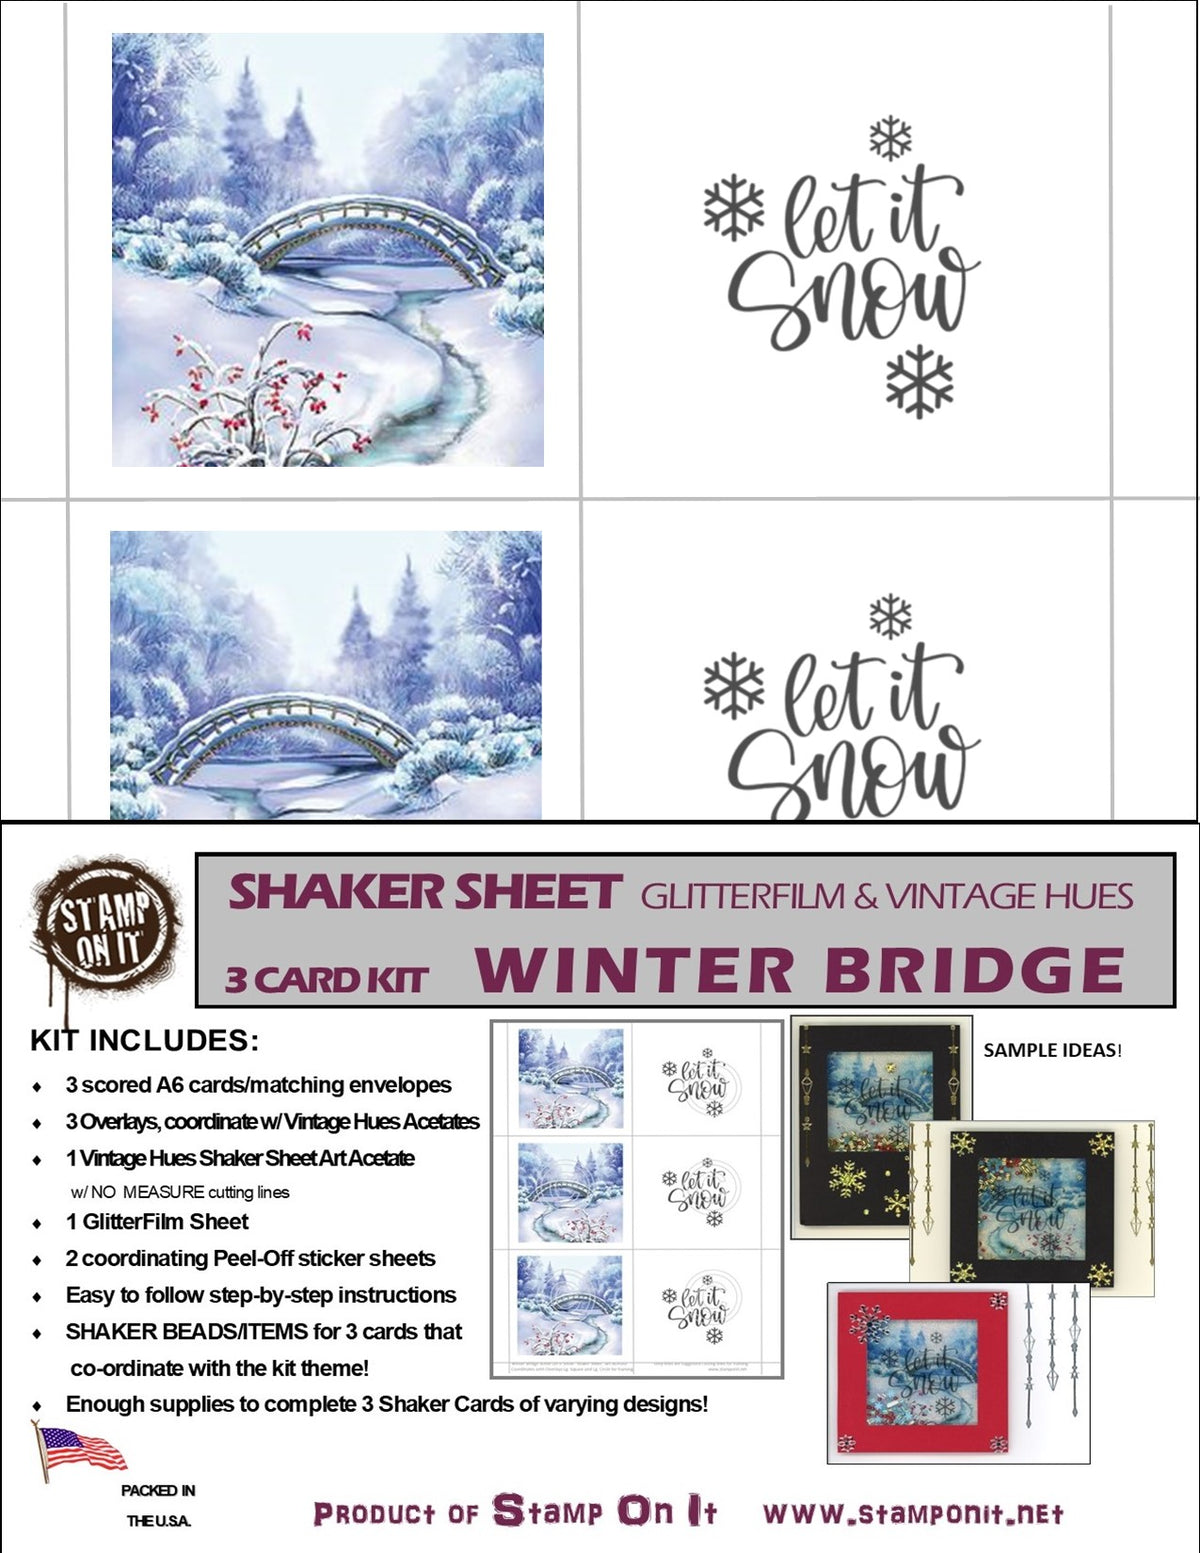 GlitterFilm & Vintage Hues Shaker Card Kit Winter Bridge